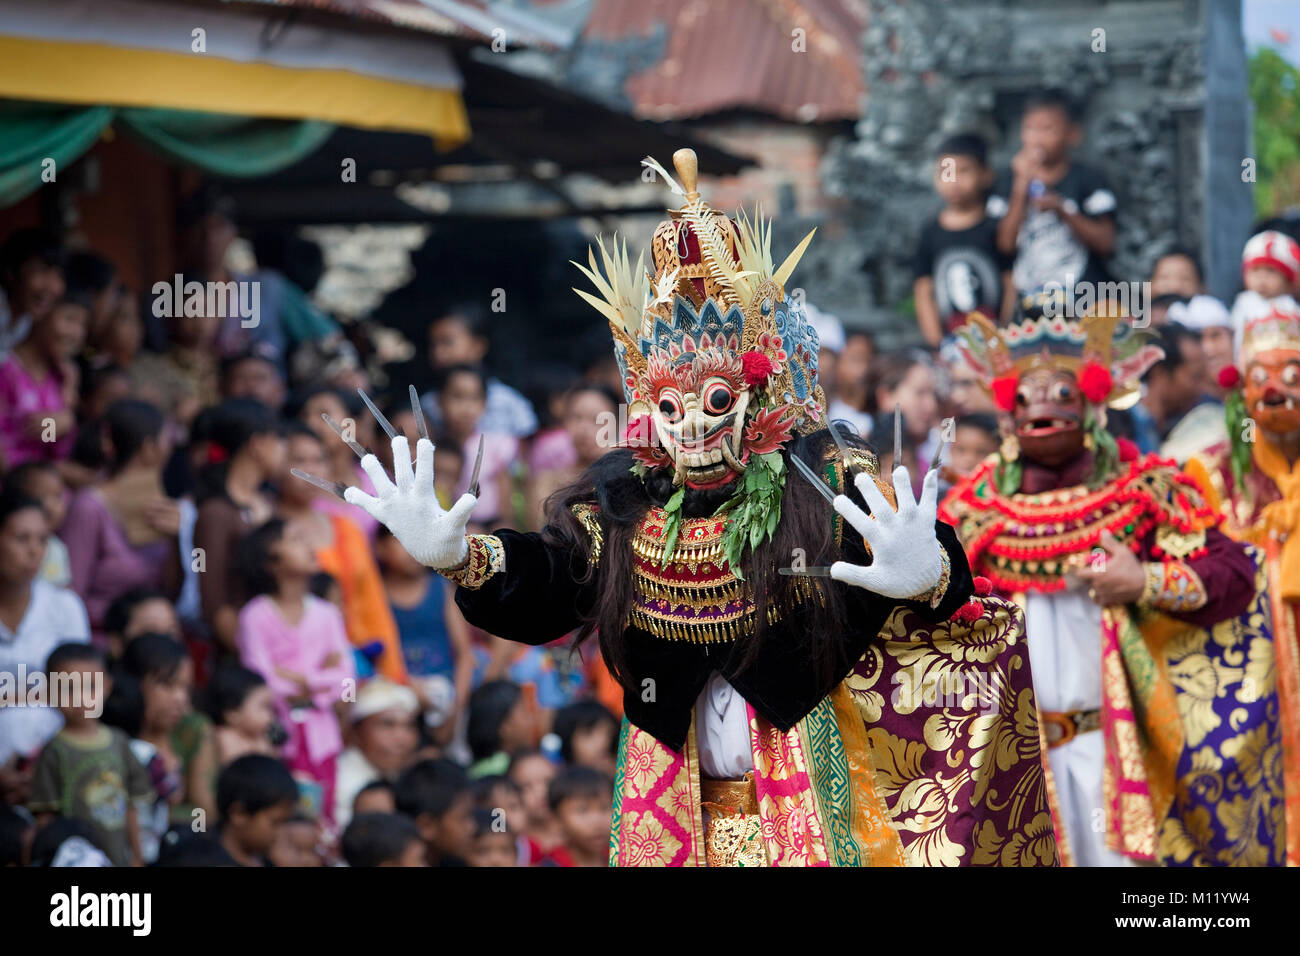 Indonesien, Insel Bali, Tejakula Dorf, Pura Maksan Tempel. Tanz Drama mit sakralen Masken namens Wayang Wong. Stockfoto